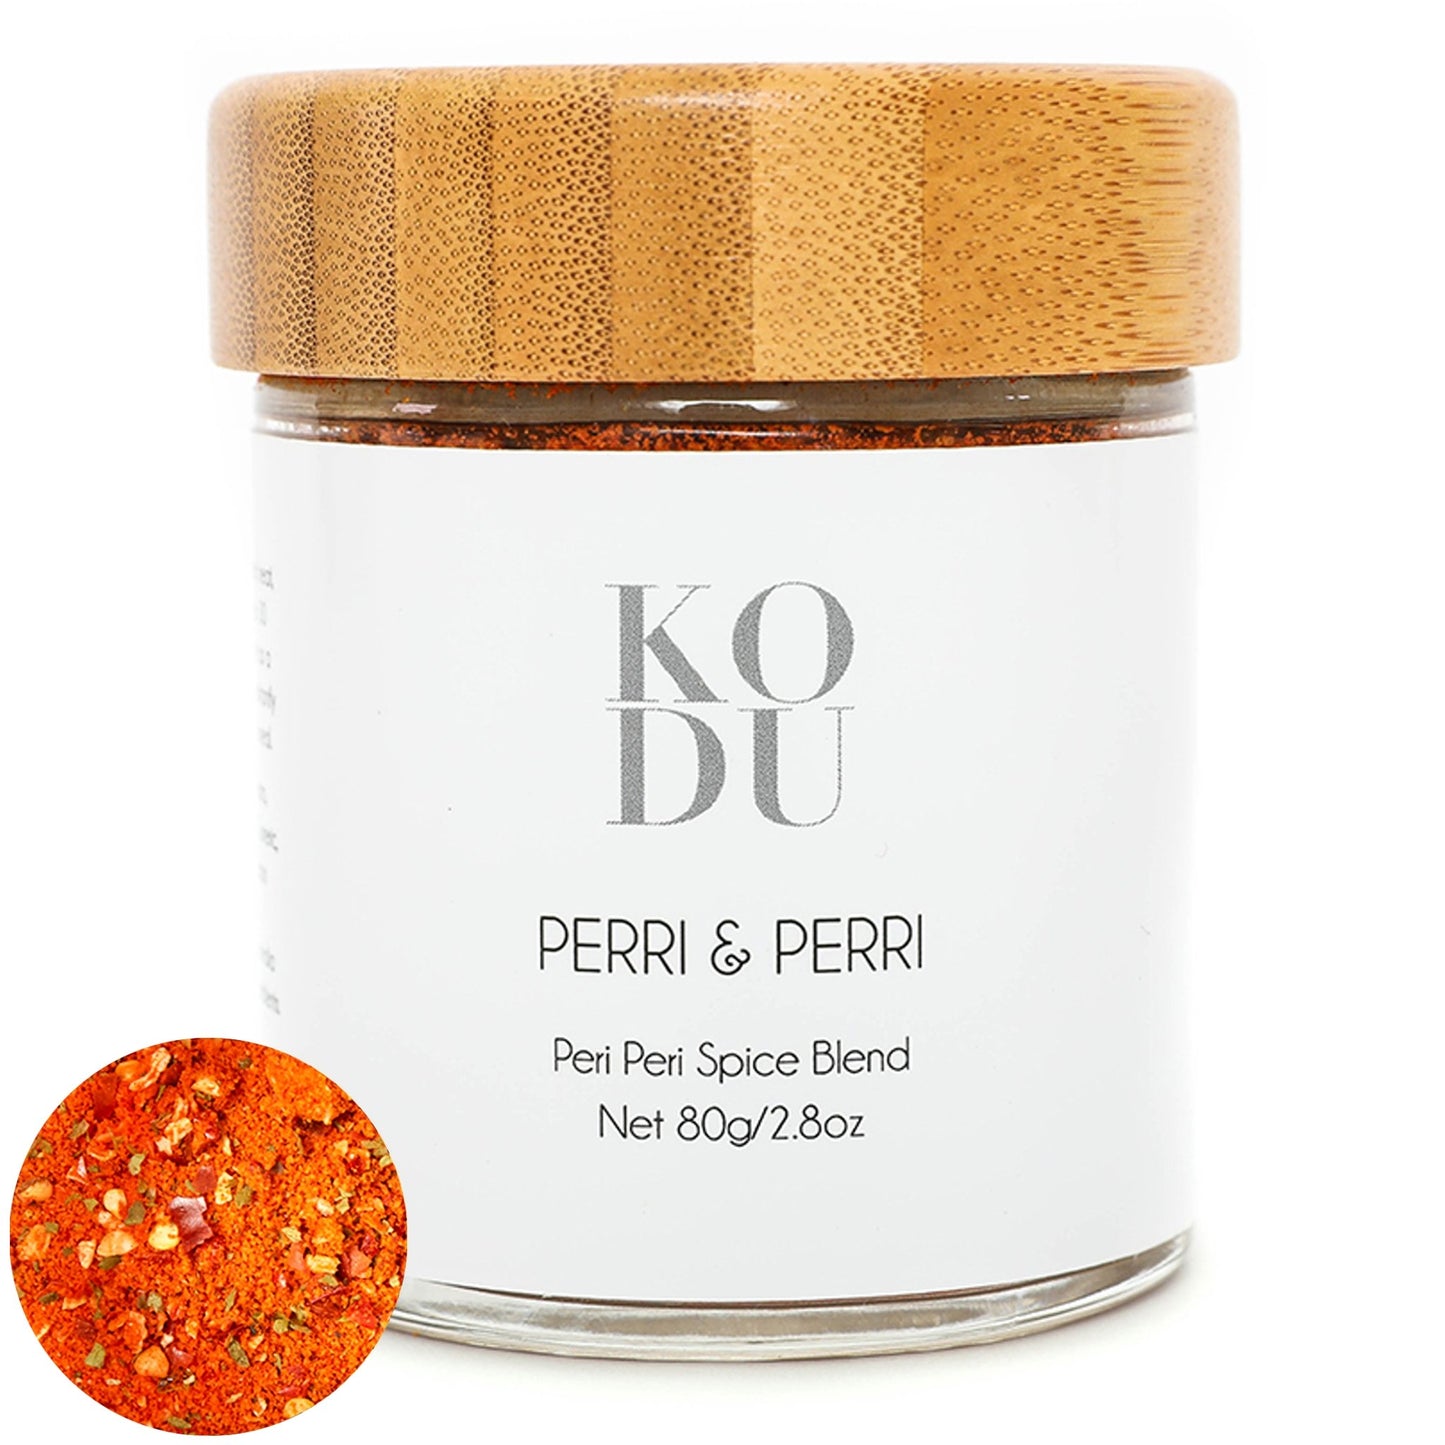 Perri and Perri - Peri Peri Chicken - Spice Mix & Seasoning Blend - mykodu